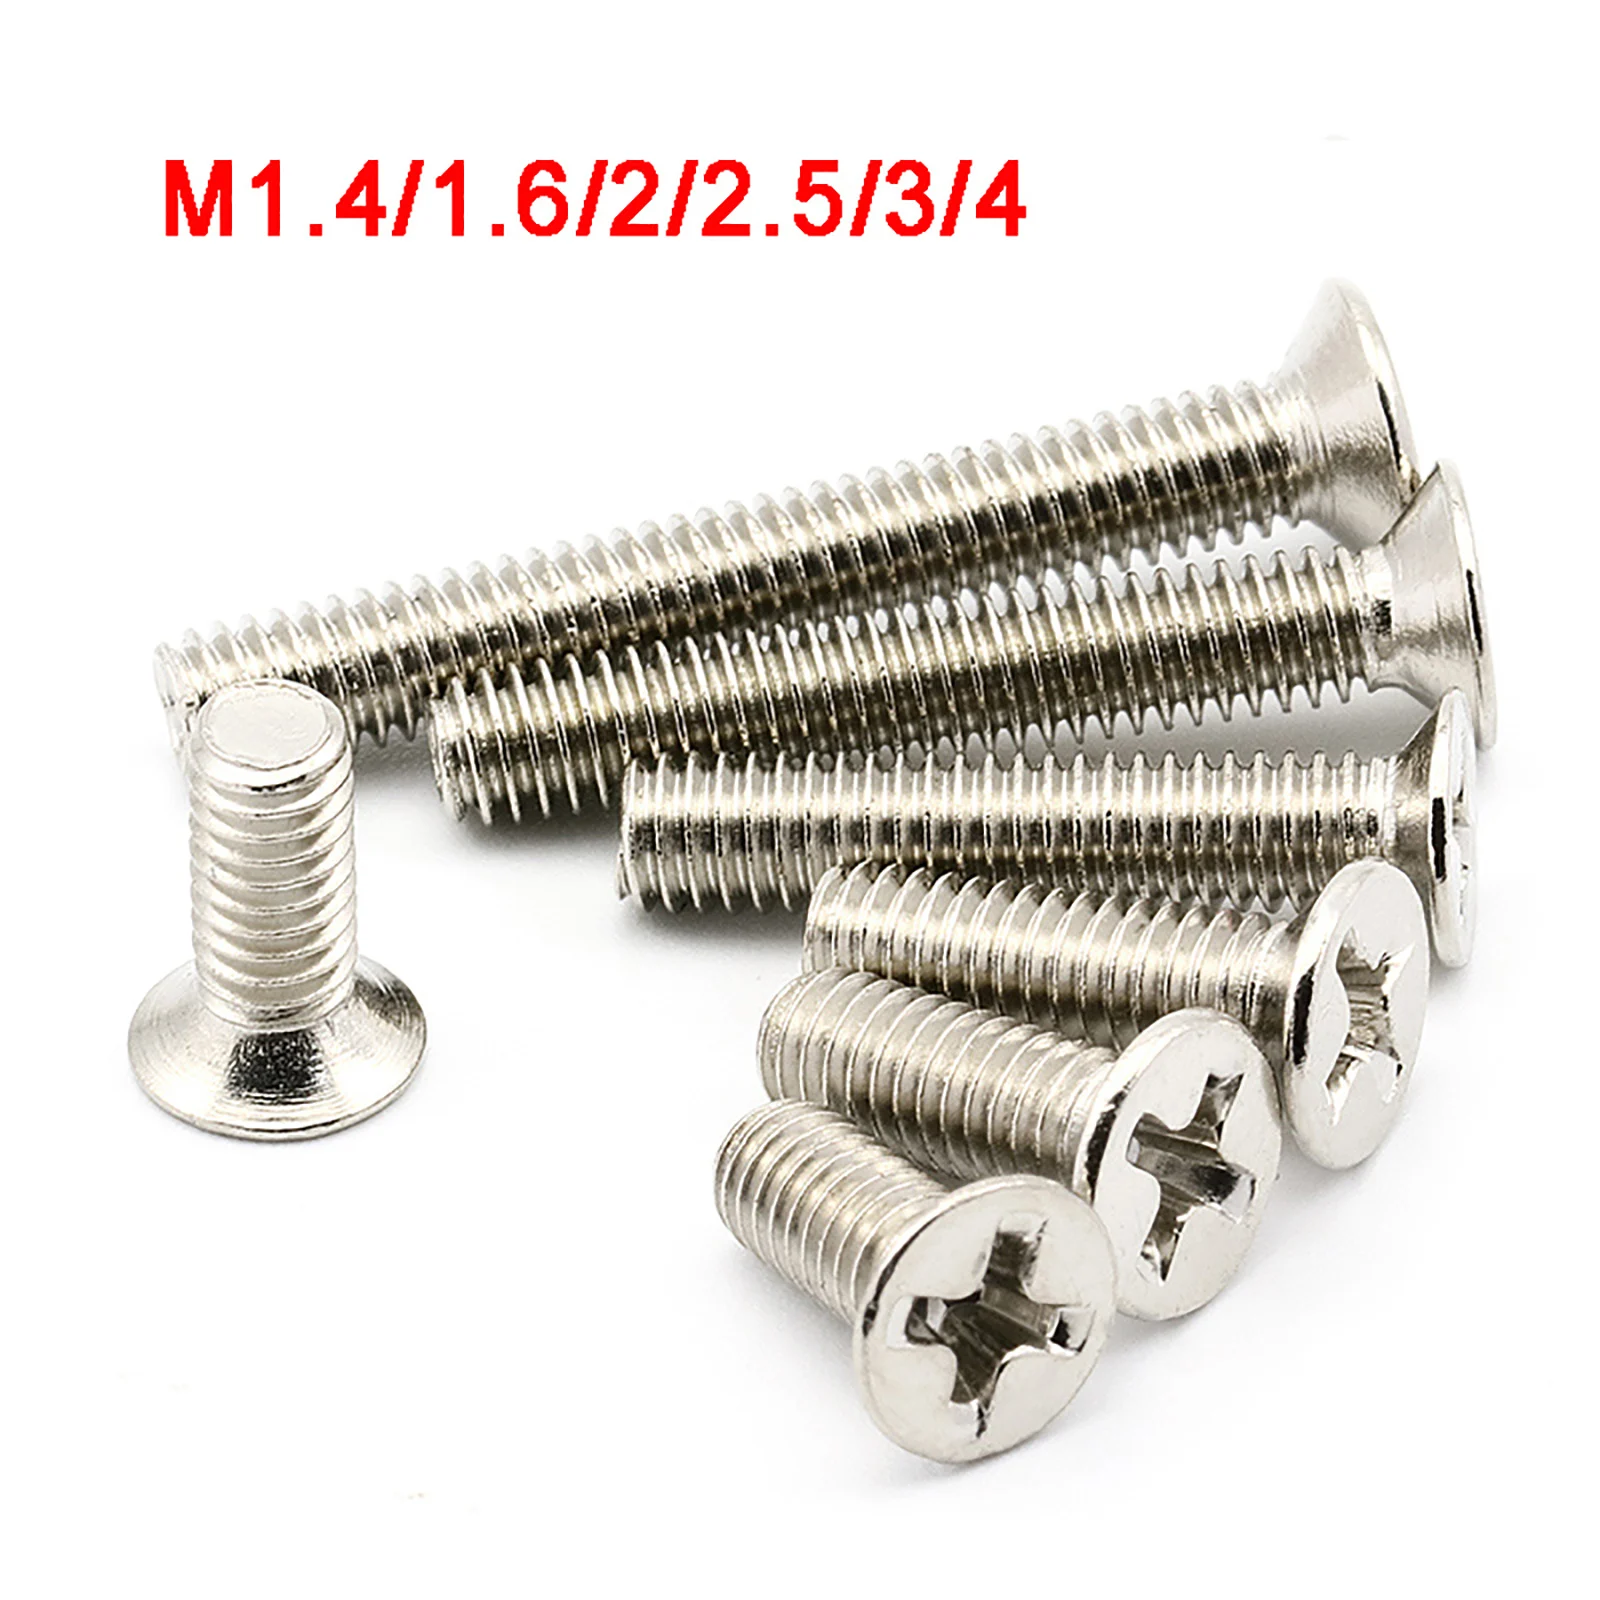 M3M4M5 304 stainless steel cross countersunk Screws T819 flat head machine screw 